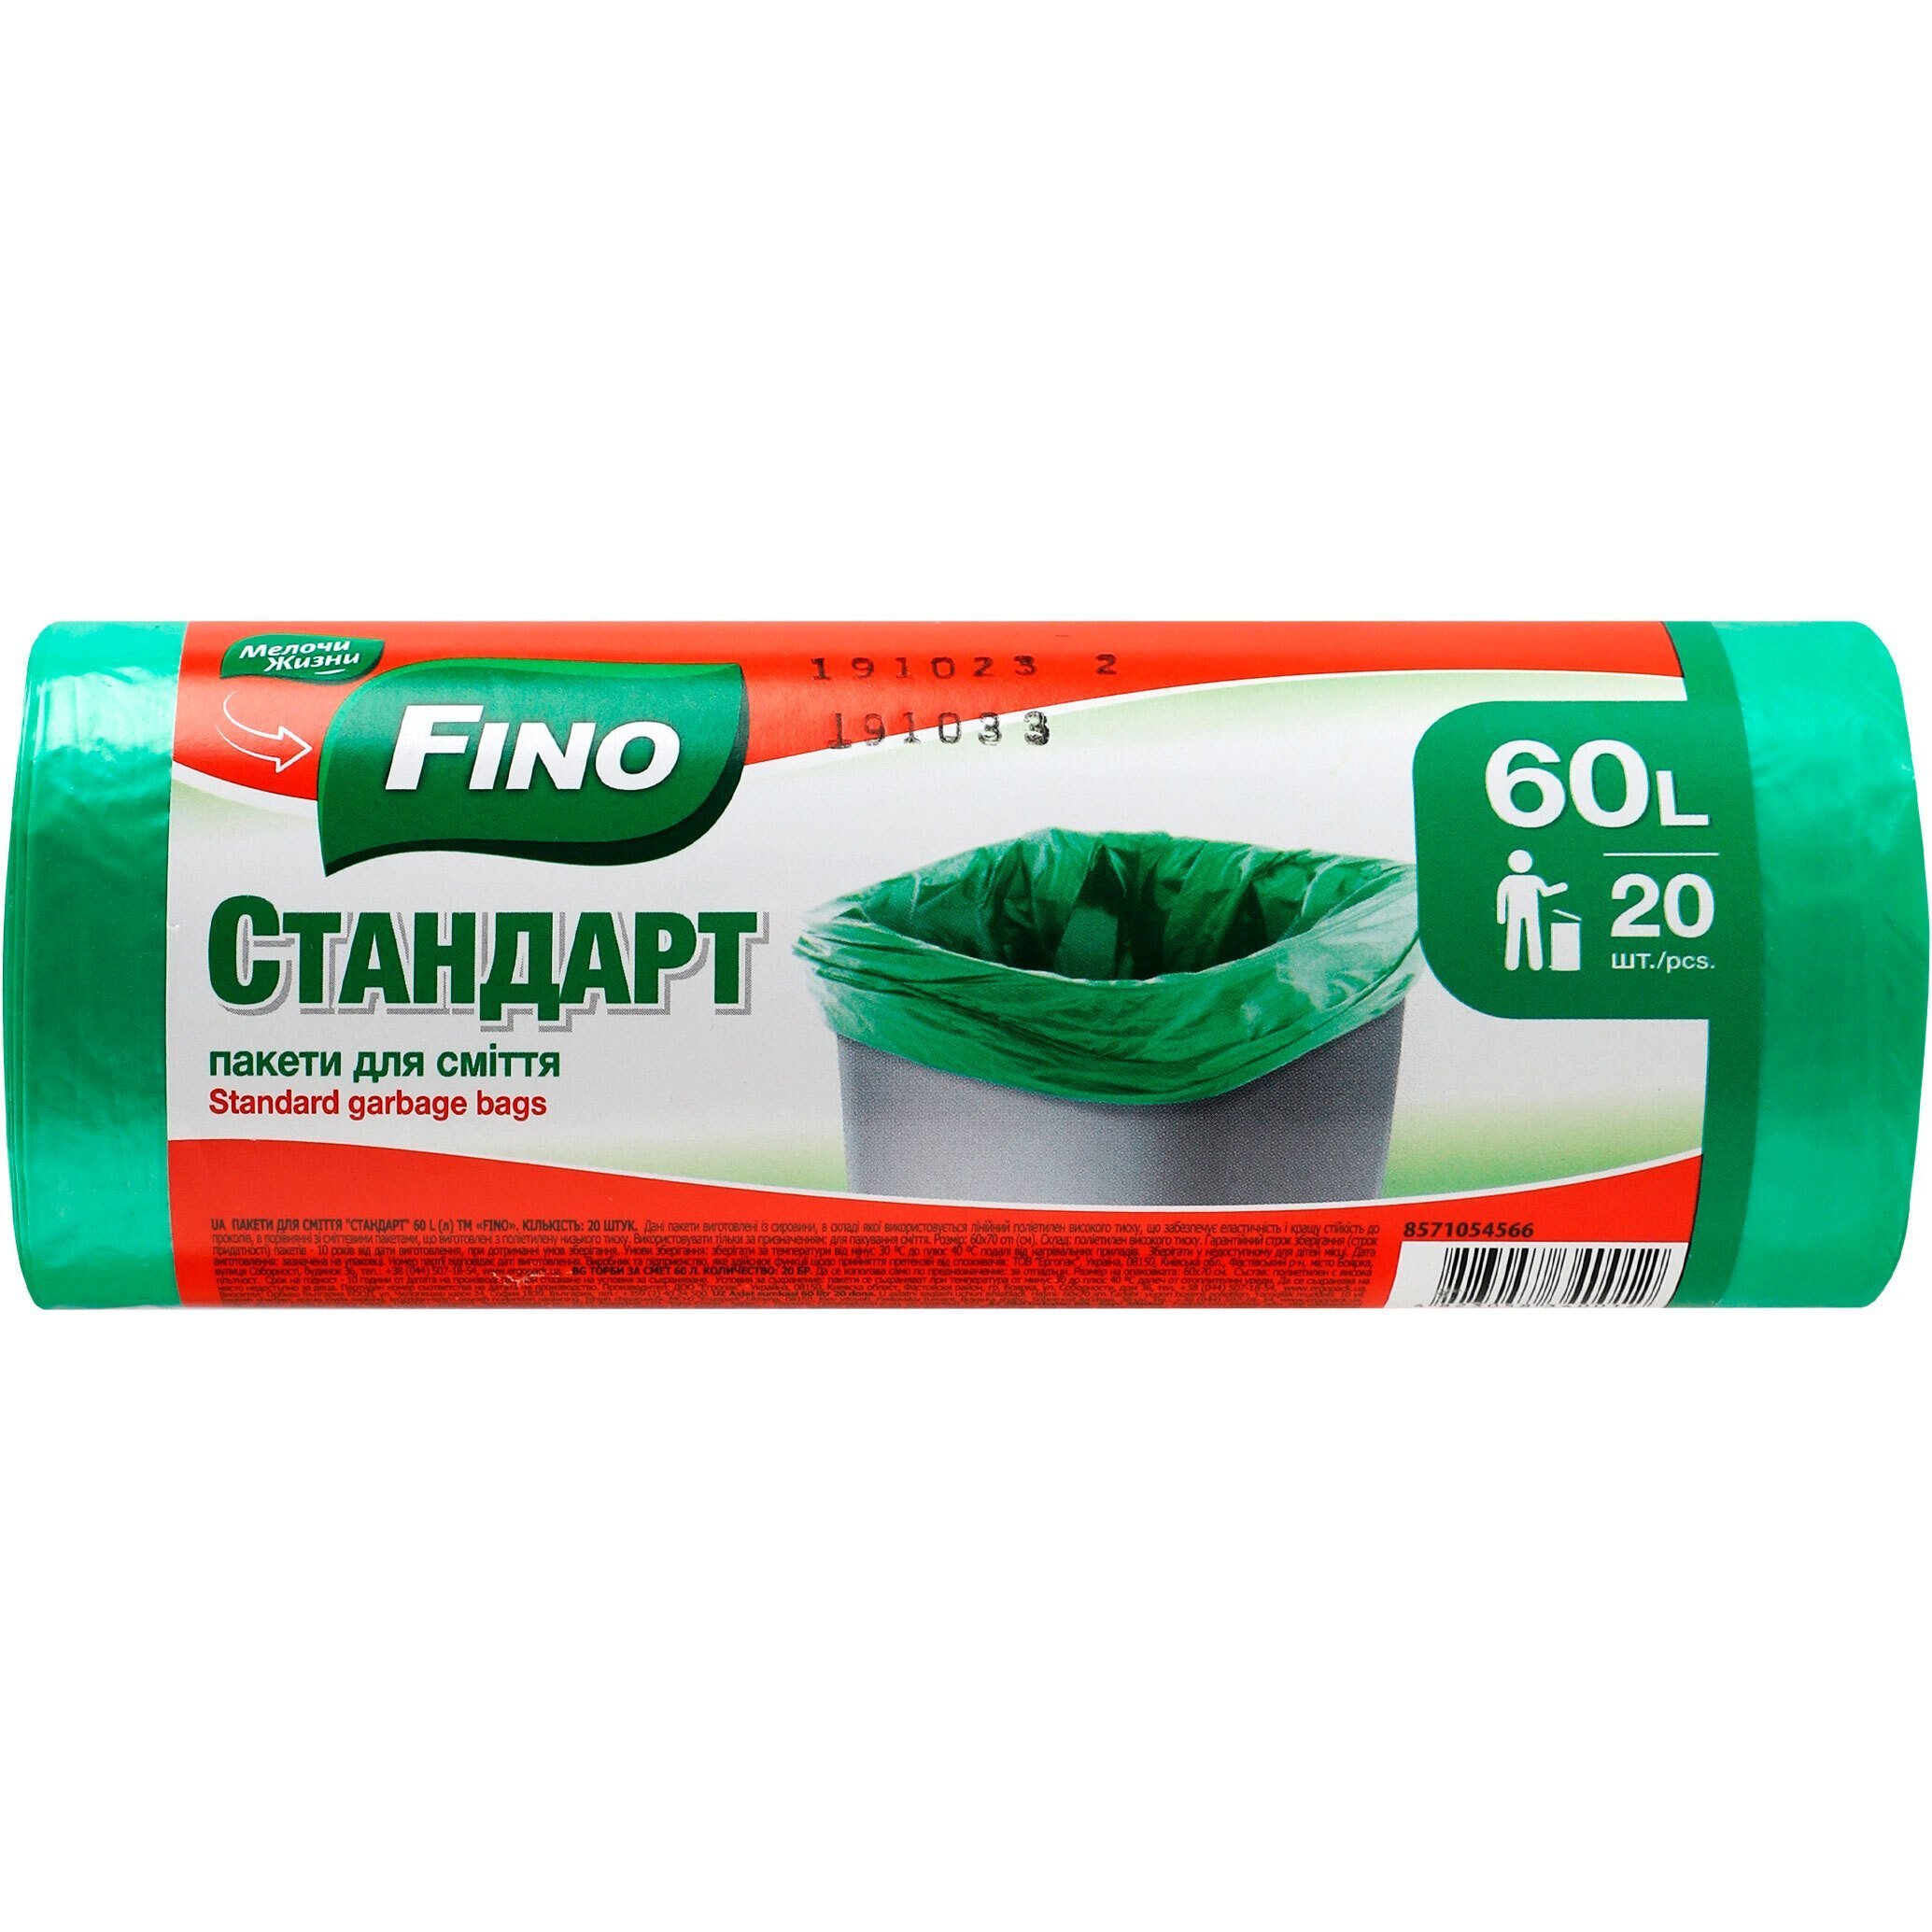 Пакеты для мусора Fino Cтандарт 60л*20шт фото 1